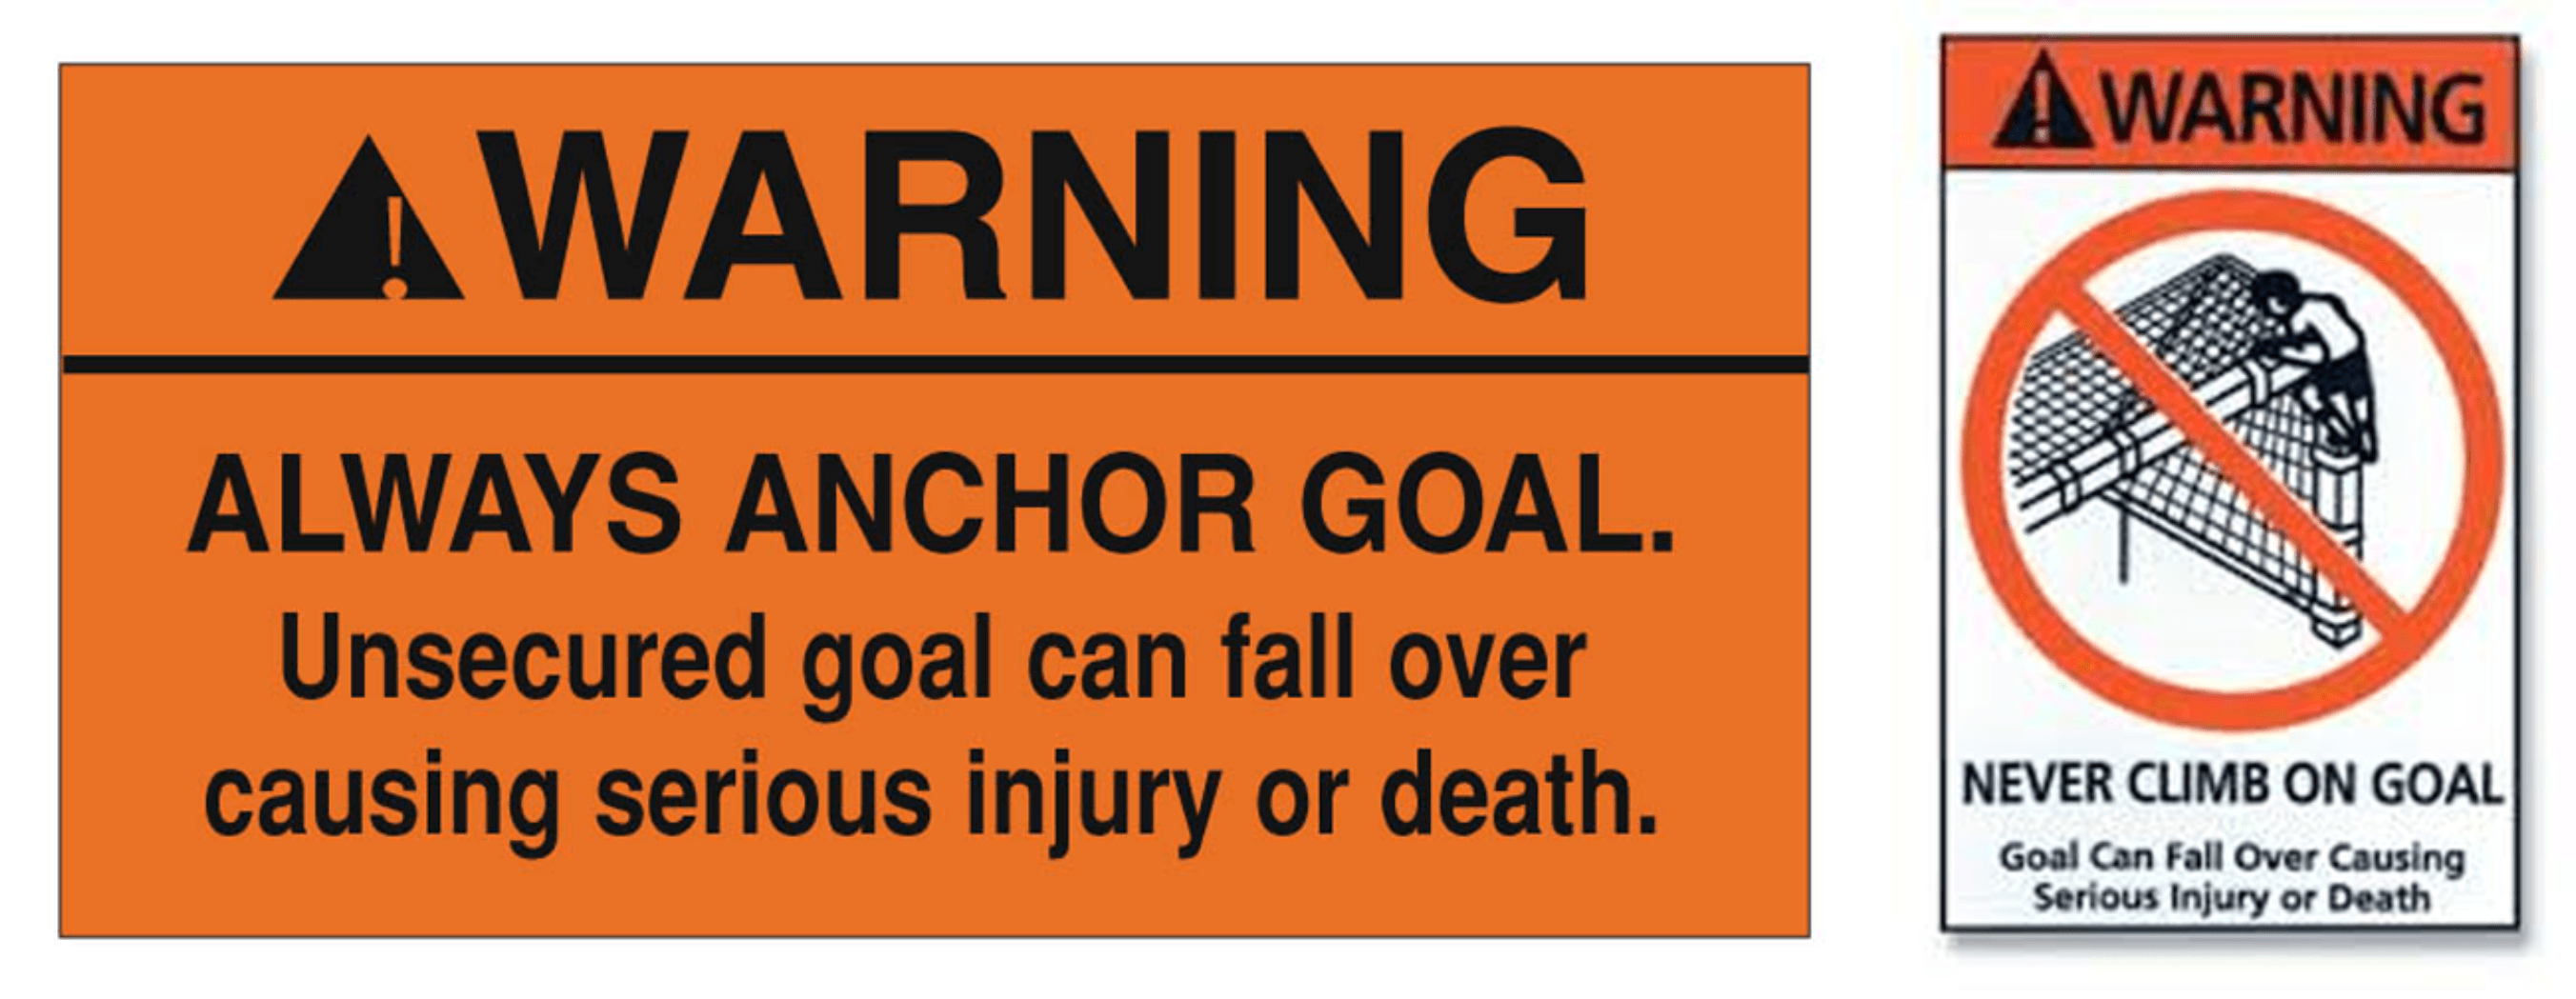 Soccer Goal Safety Sticker Large